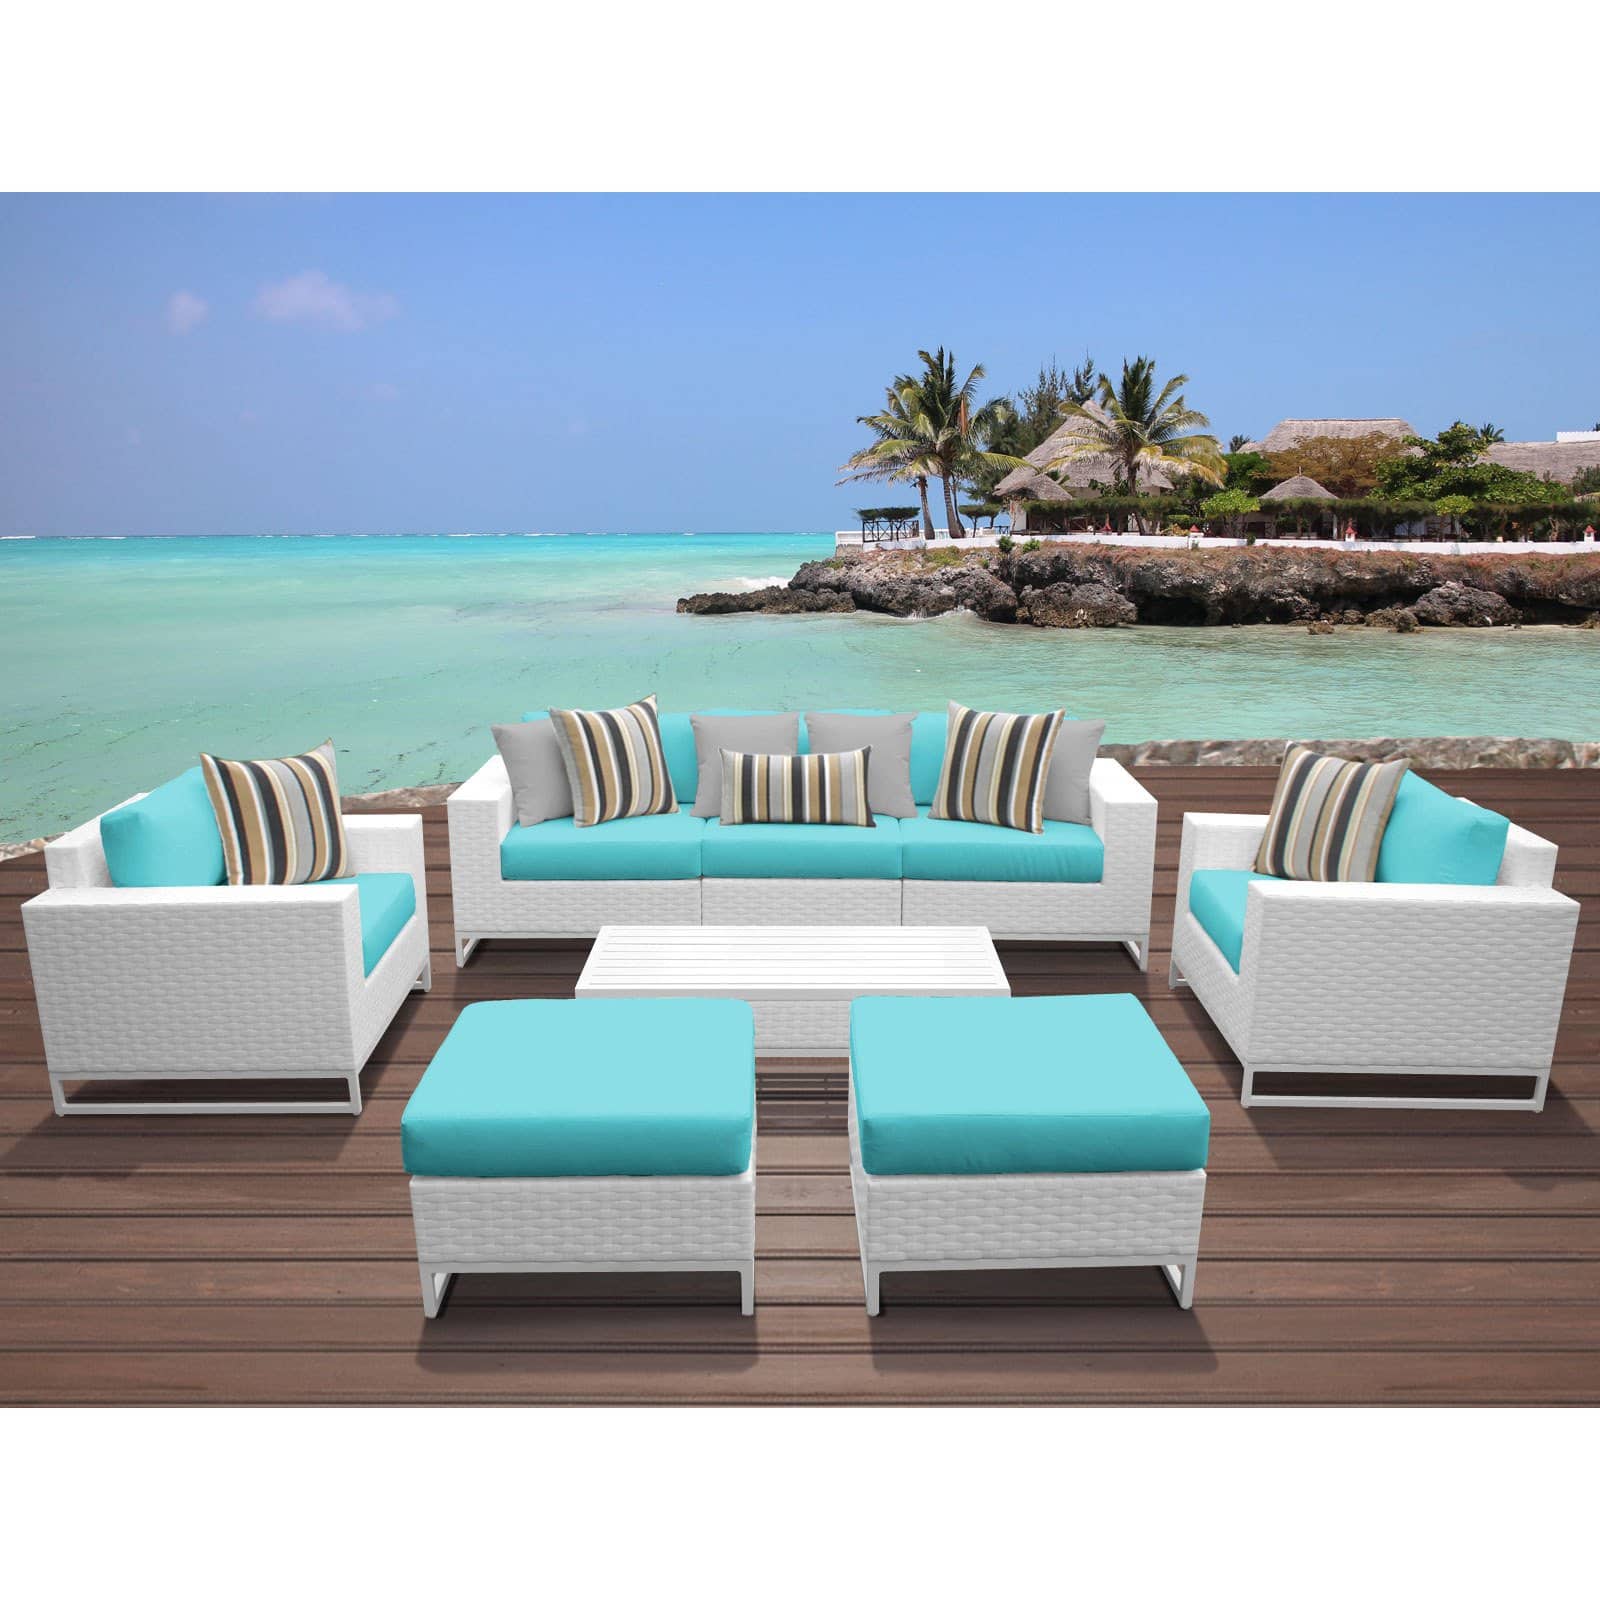 TK Classics Miami 8 Piece Outdoor Wicker Patio Furniture Set 08a - image 2 of 3